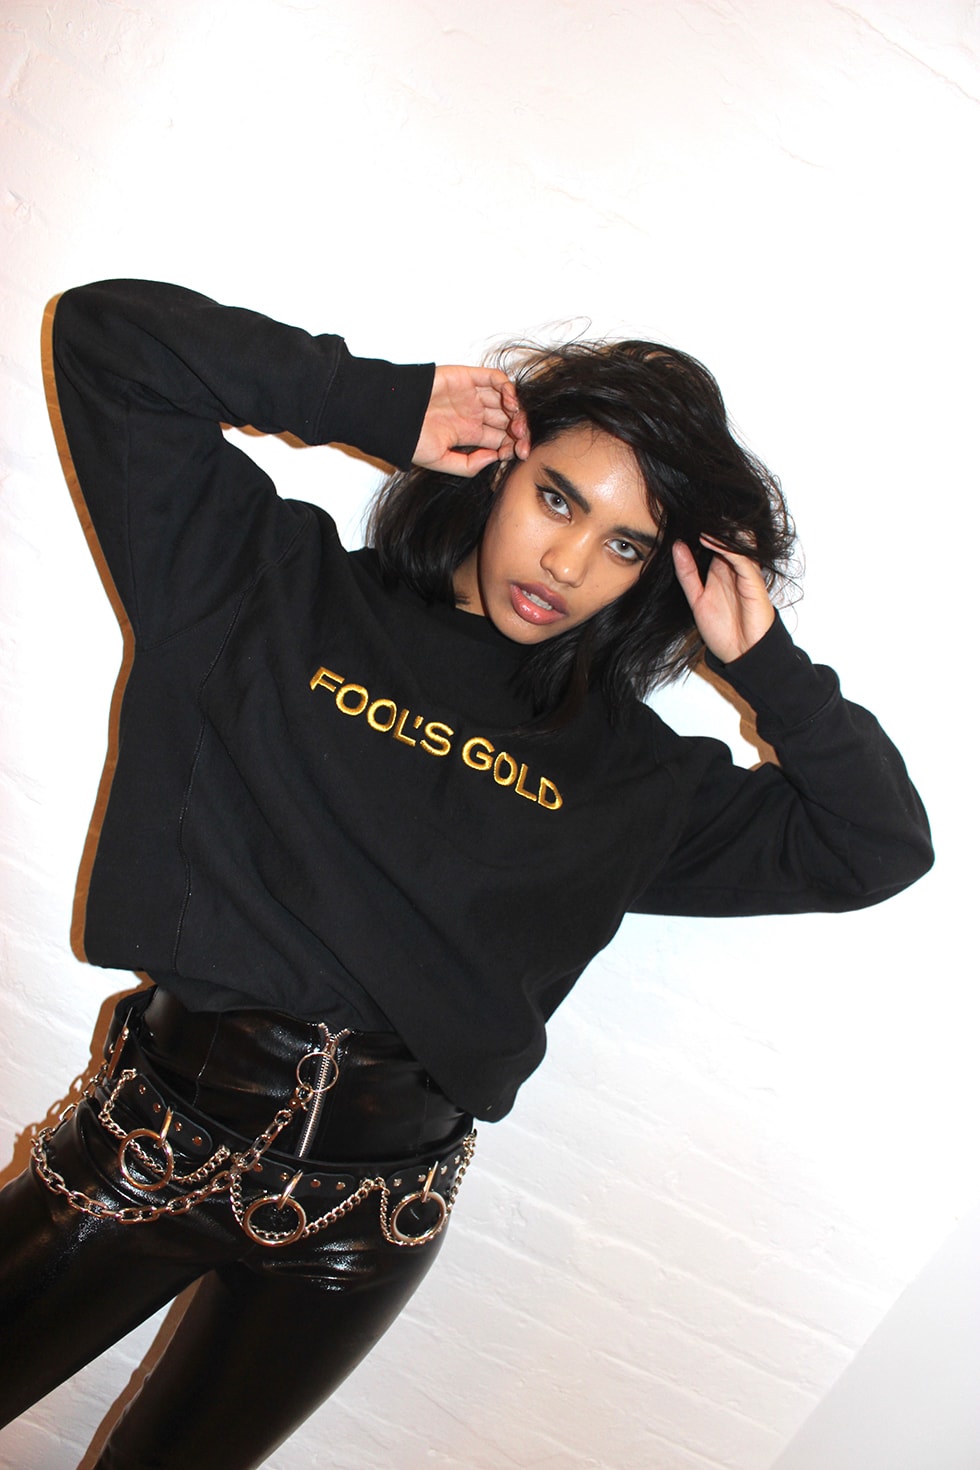 Fools Gold 10 Year Anniversary Lookbook 2017